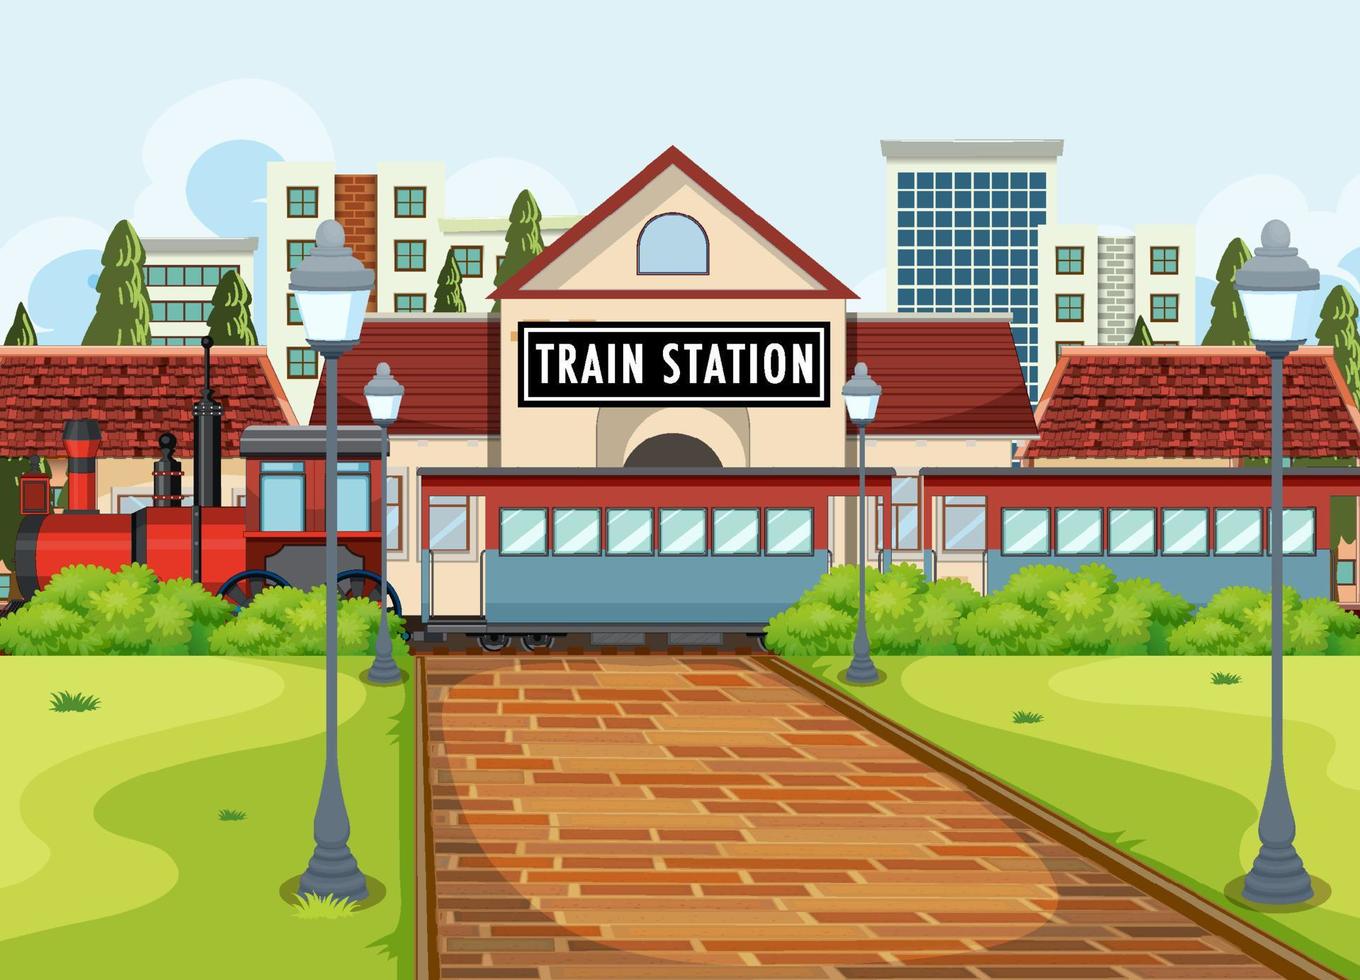 Train station scene with steam locomotive vector